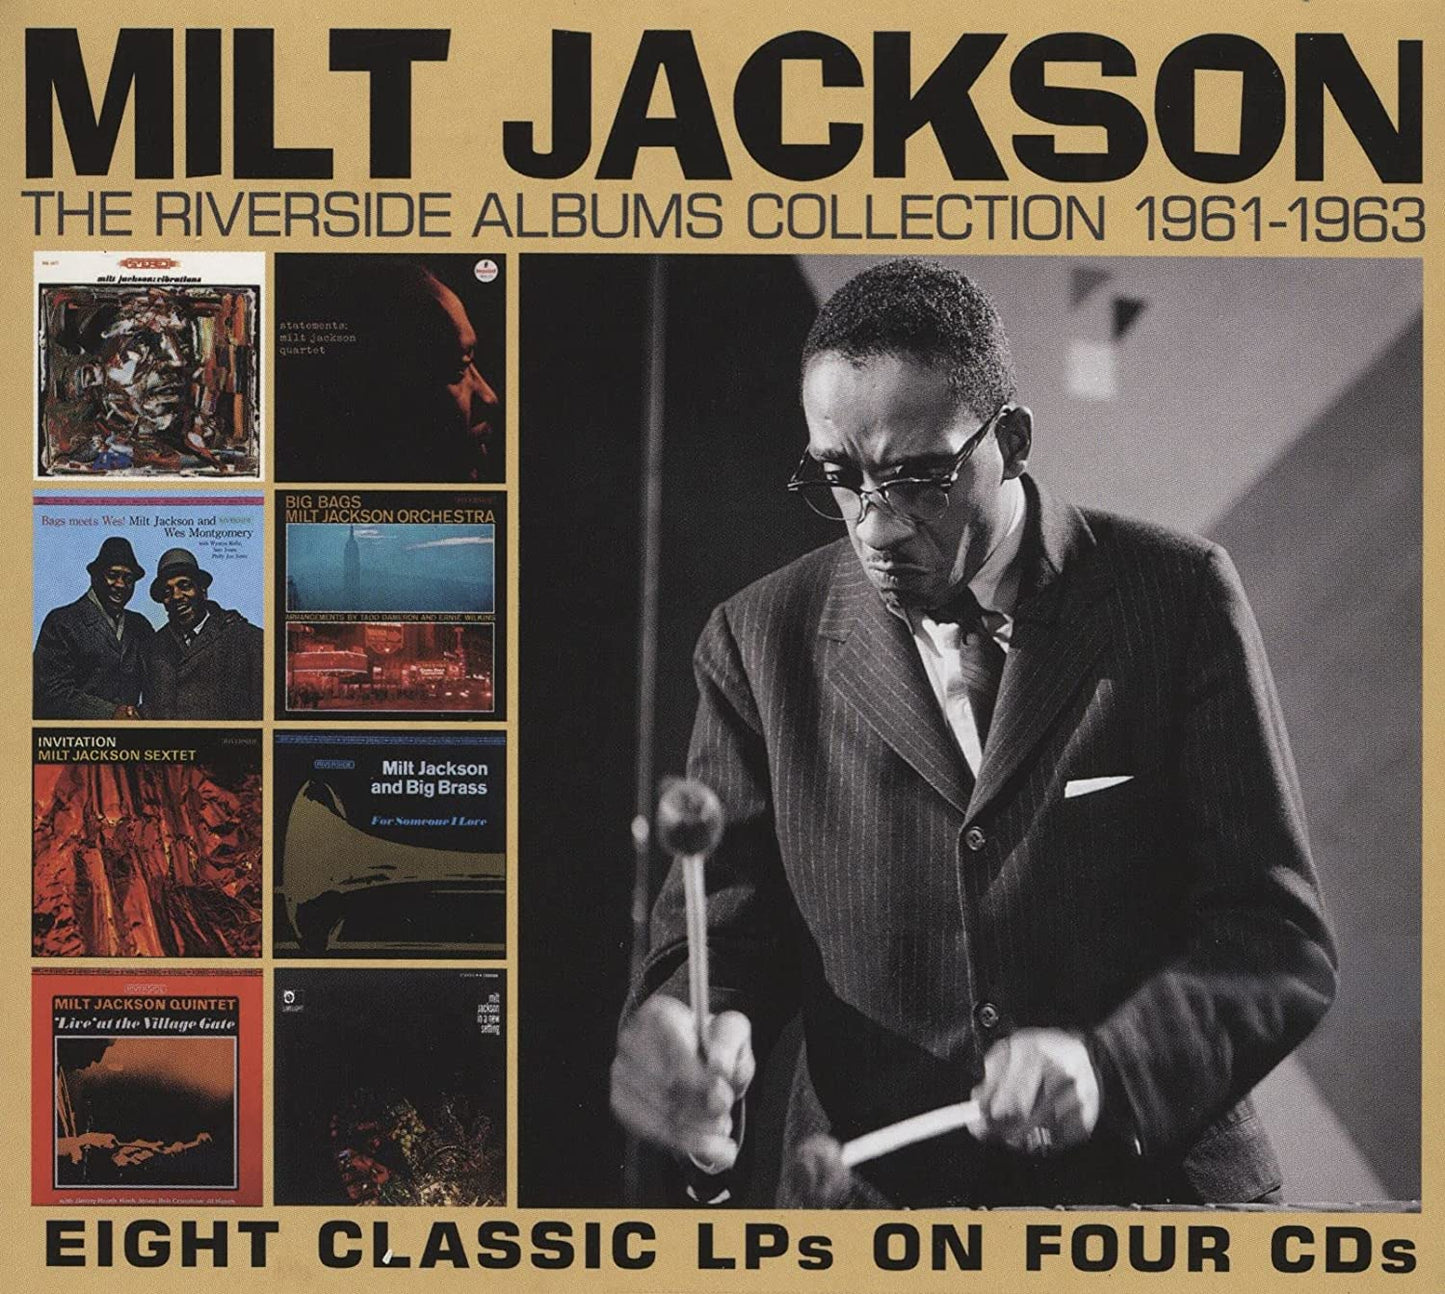 MILT JACKSON: The Riverside Albums Collection 1961-1963 (4 CDS)